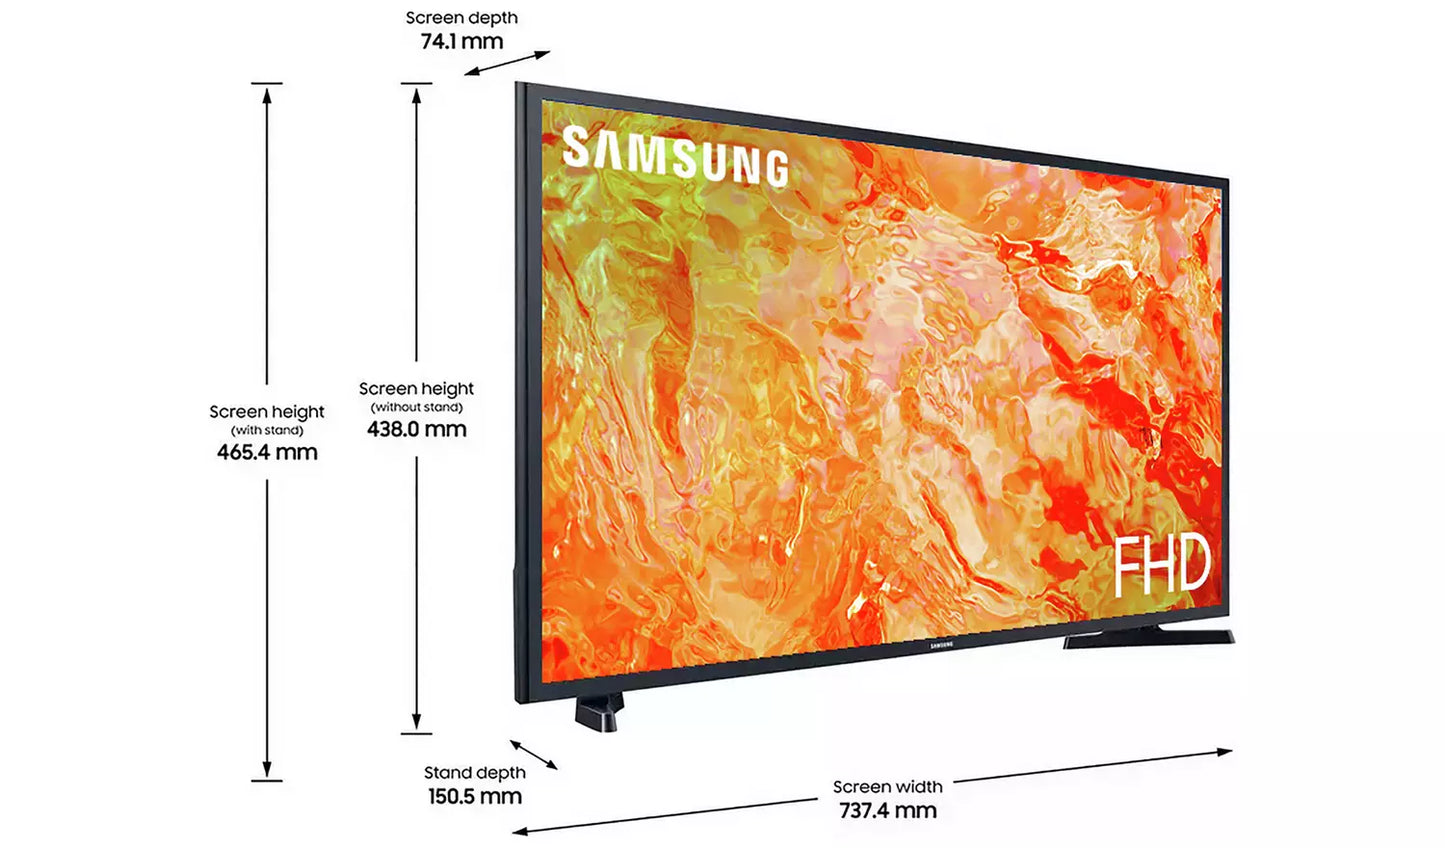 SAMSUNG UE32T5300CEXXU 32" Smart Full HD HDR LED TV